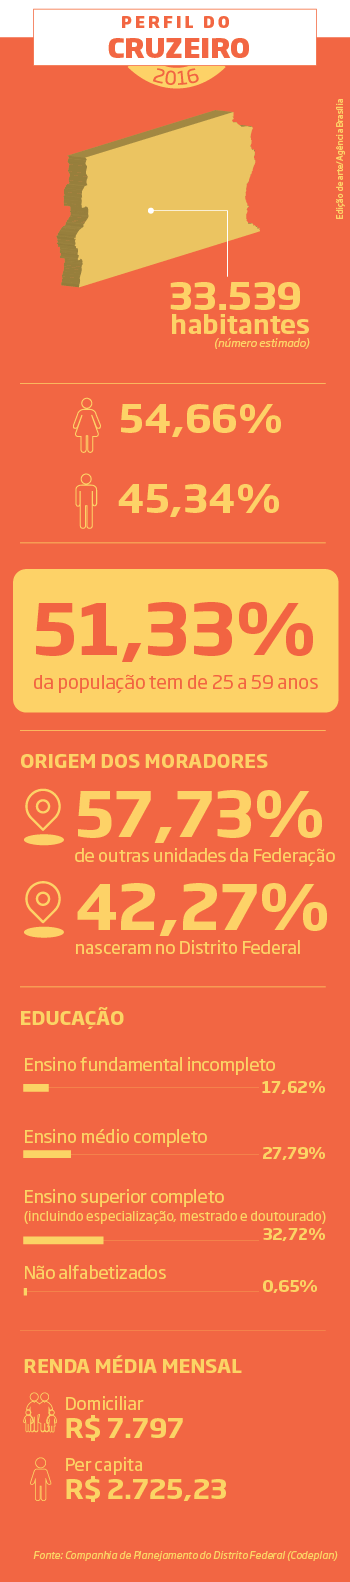 Reprodução/Agência Brasília